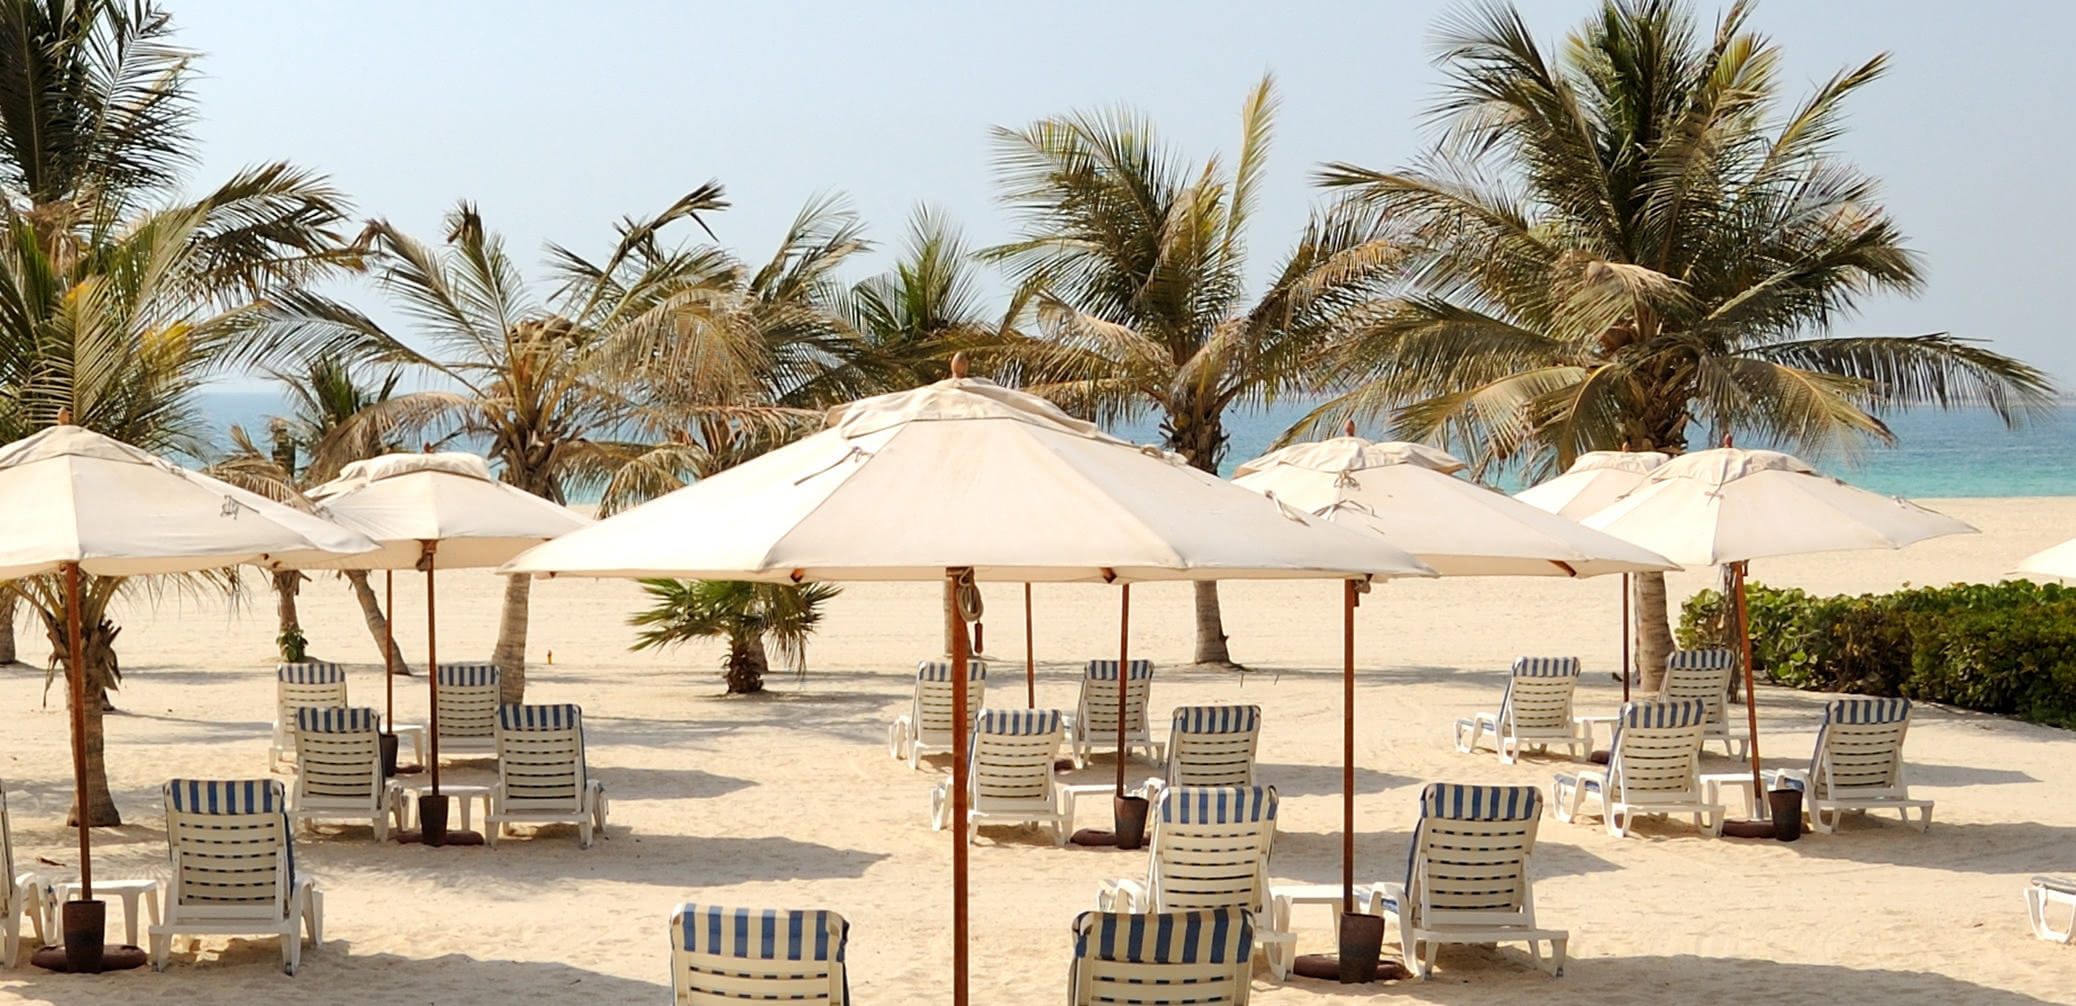 Which Is The Best Luxury Hotel: Conrad Dubai Or Waldorf Astoria Palm?